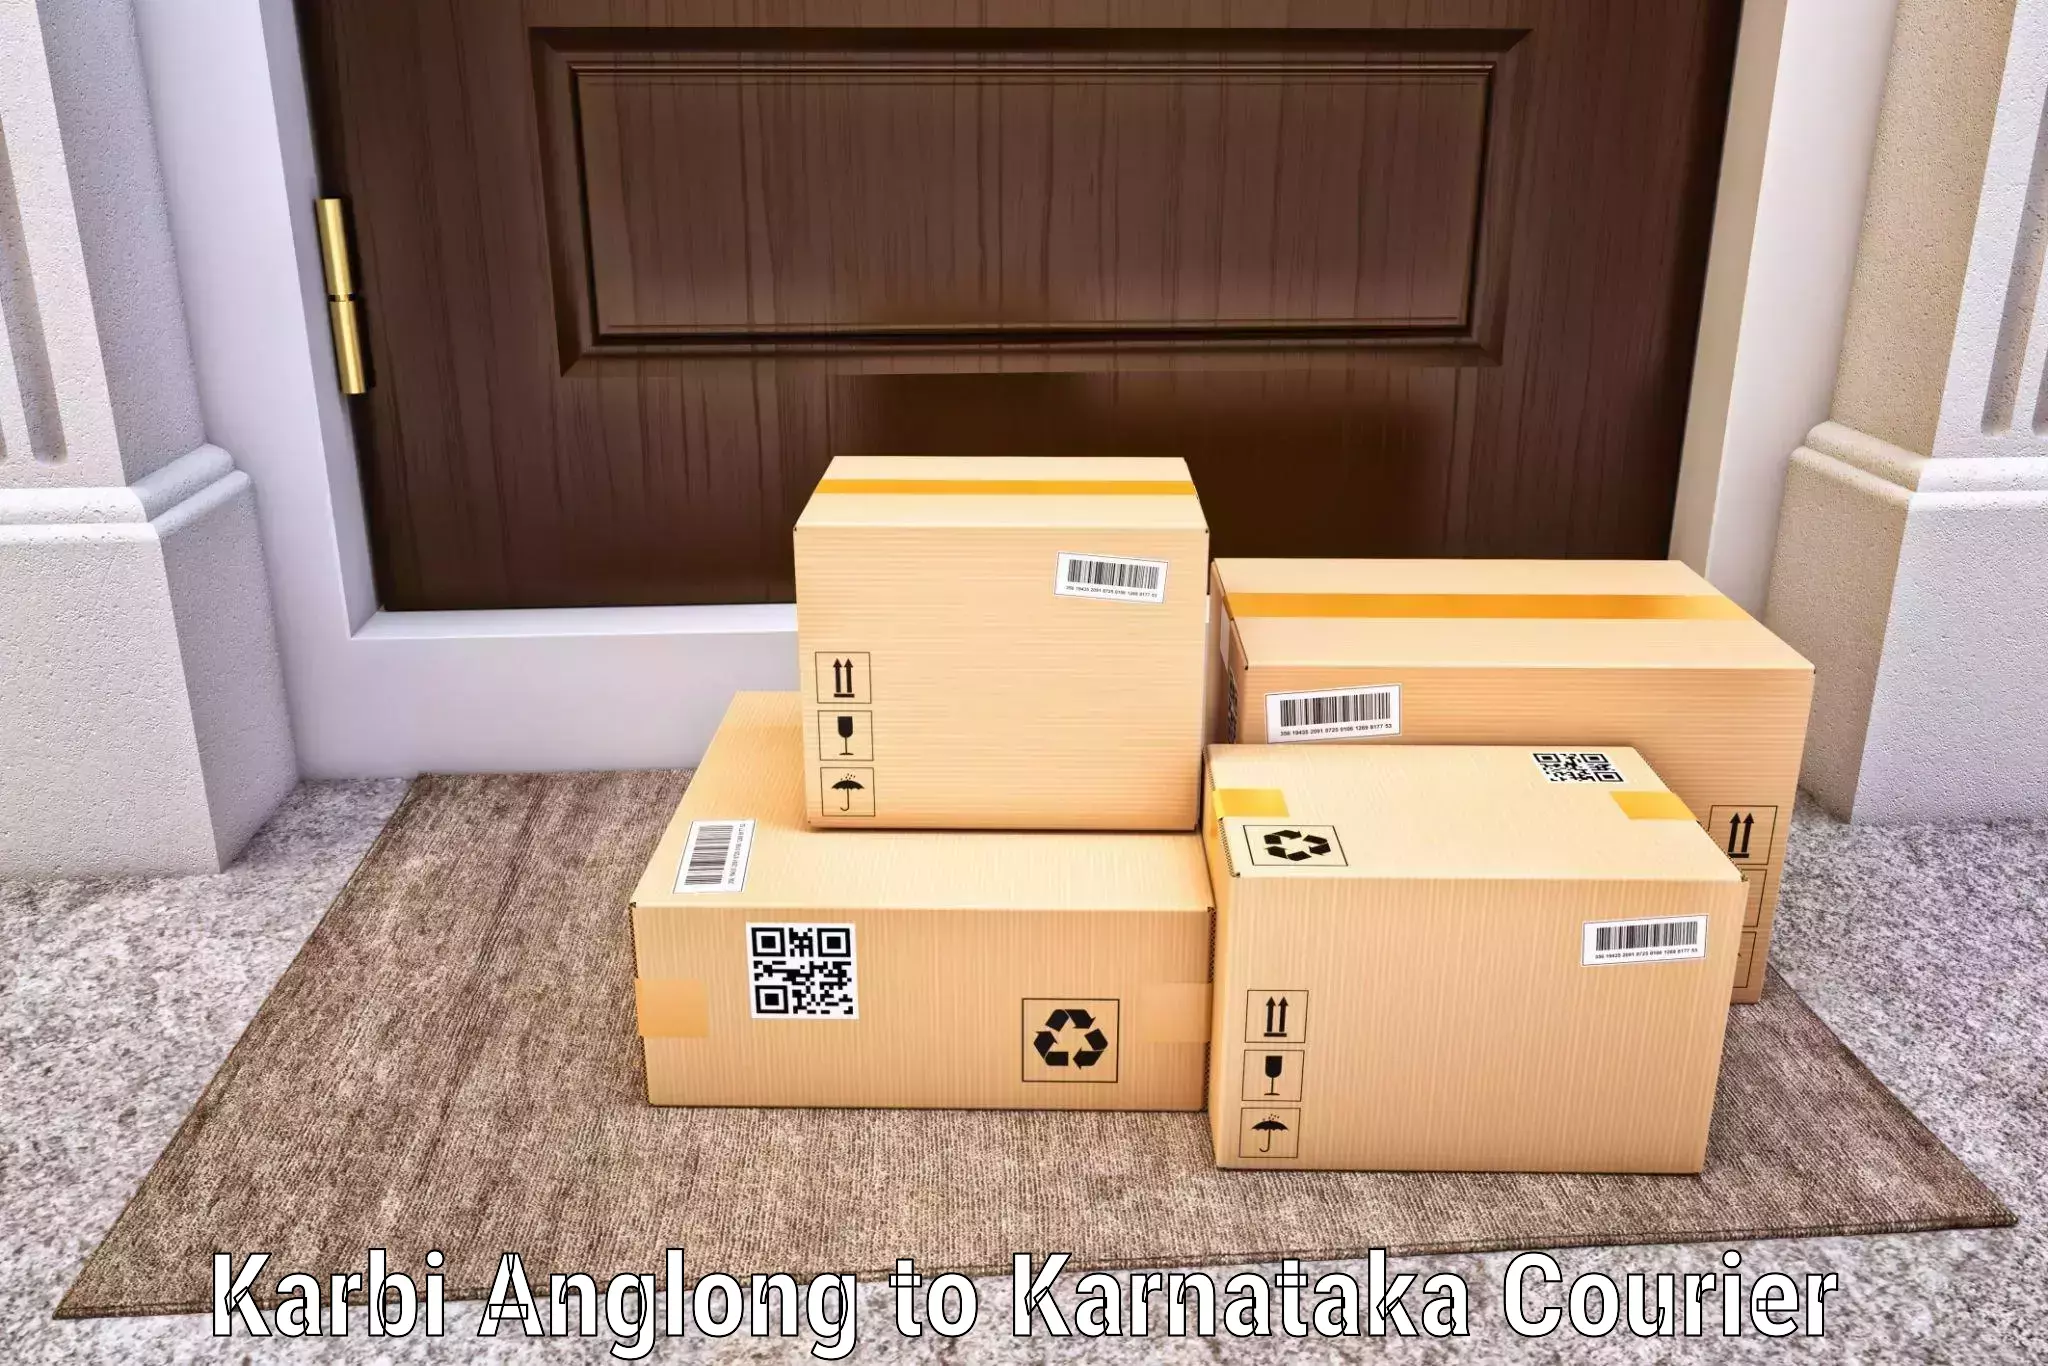 Logistics and distribution Karbi Anglong to Tavarekere